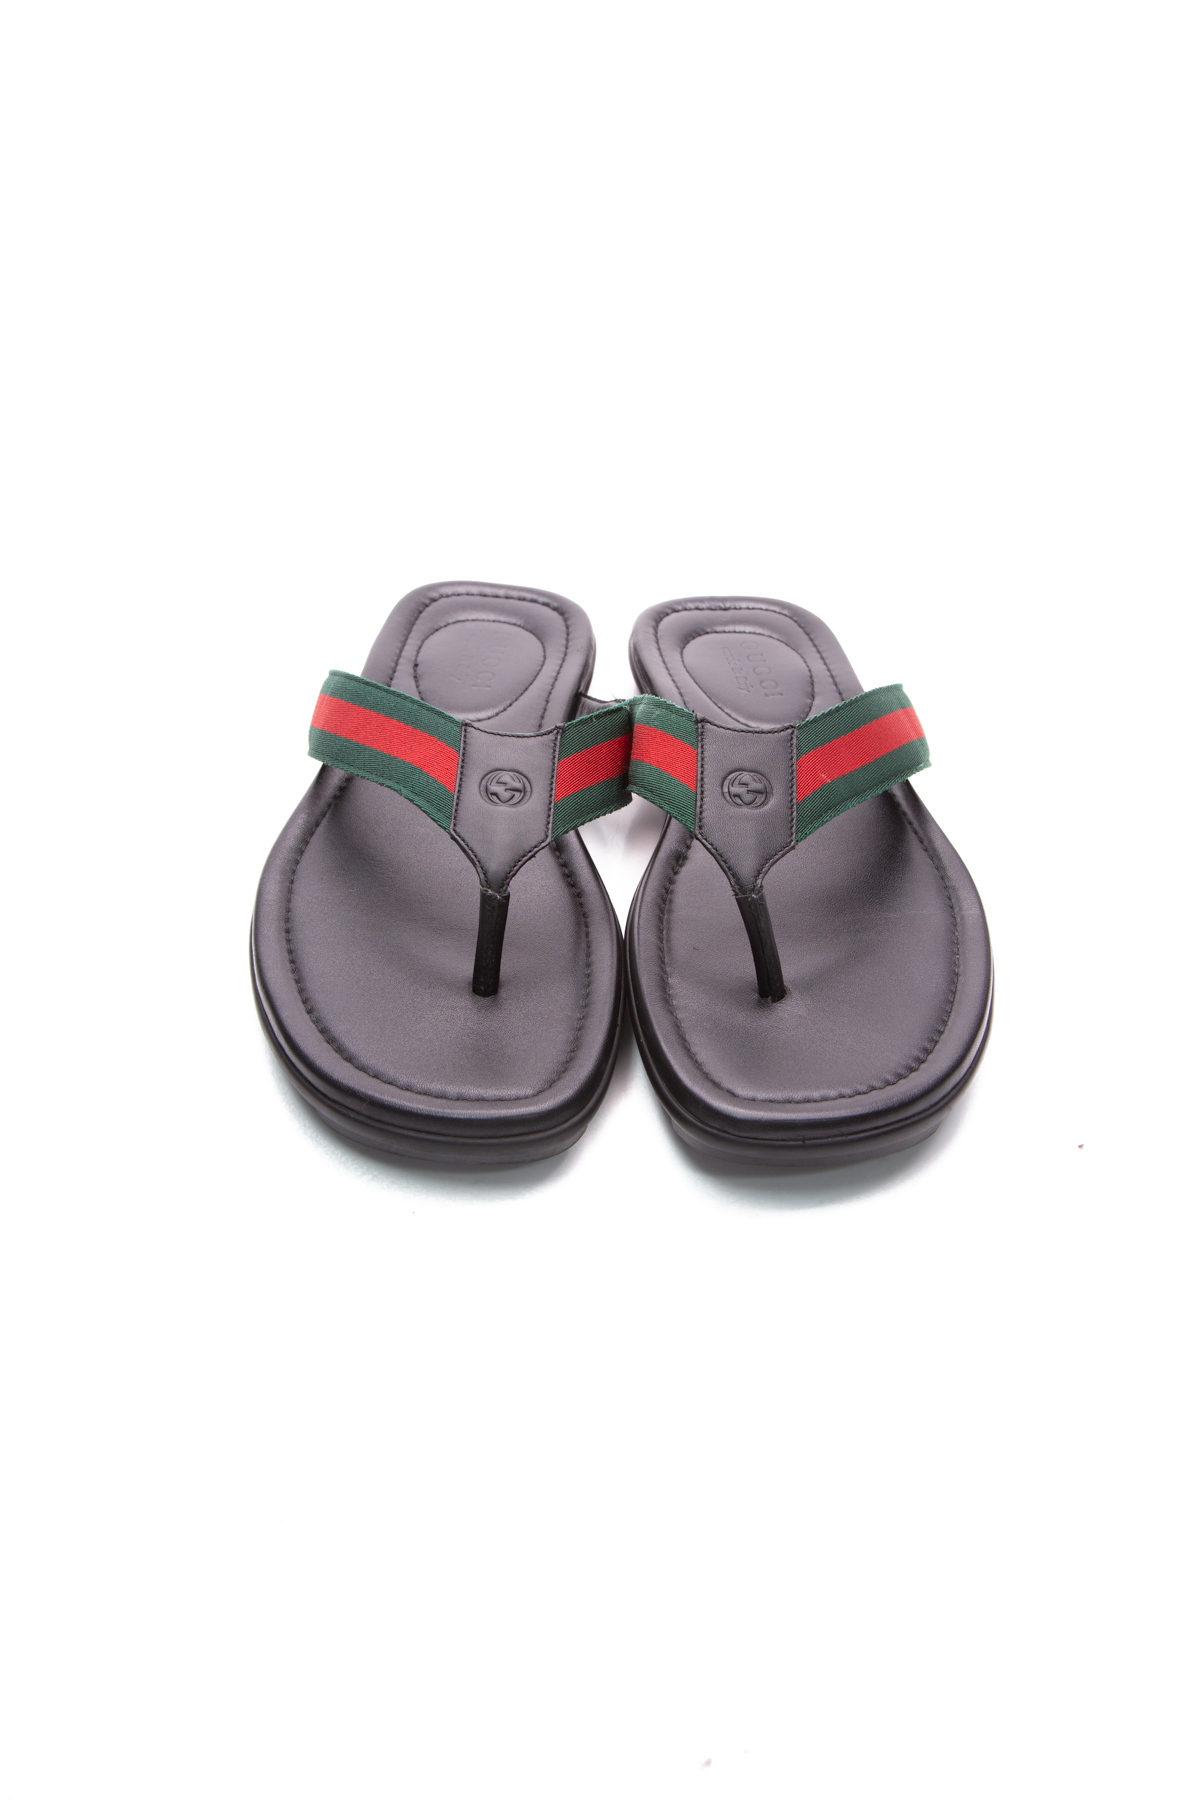 Gucci Black Mens Web Thong Sandals - Size US 11